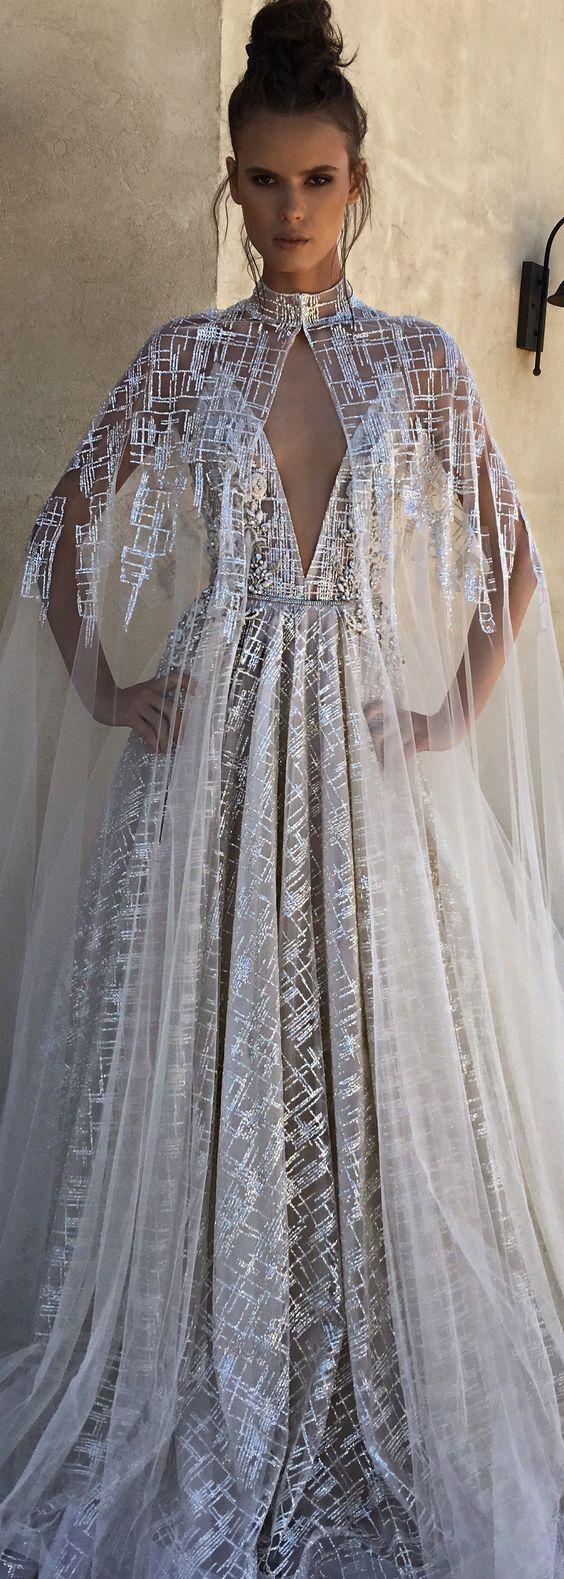 Wedding - Berta Bridal Wedding Dresses 2018